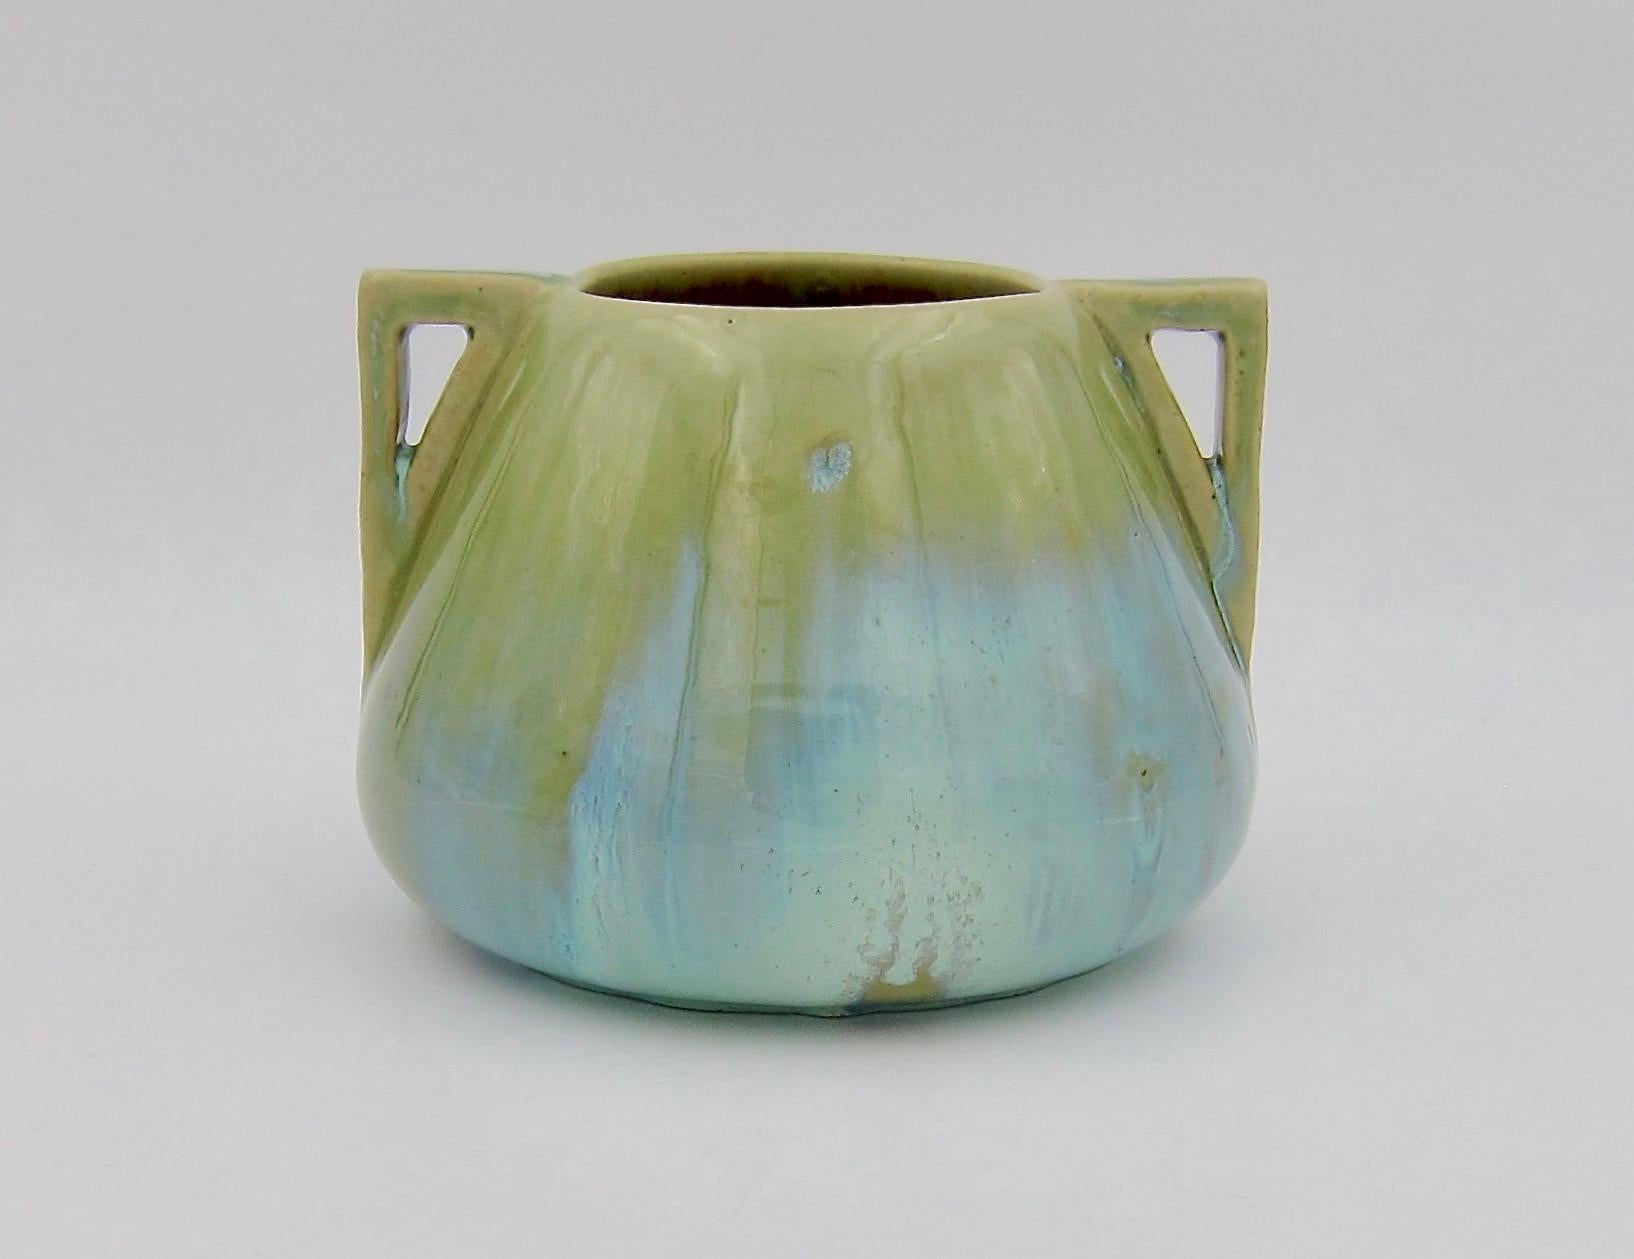 American Vintage Fulper Pottery Double Handled Vase with a Green Flambé Glaze